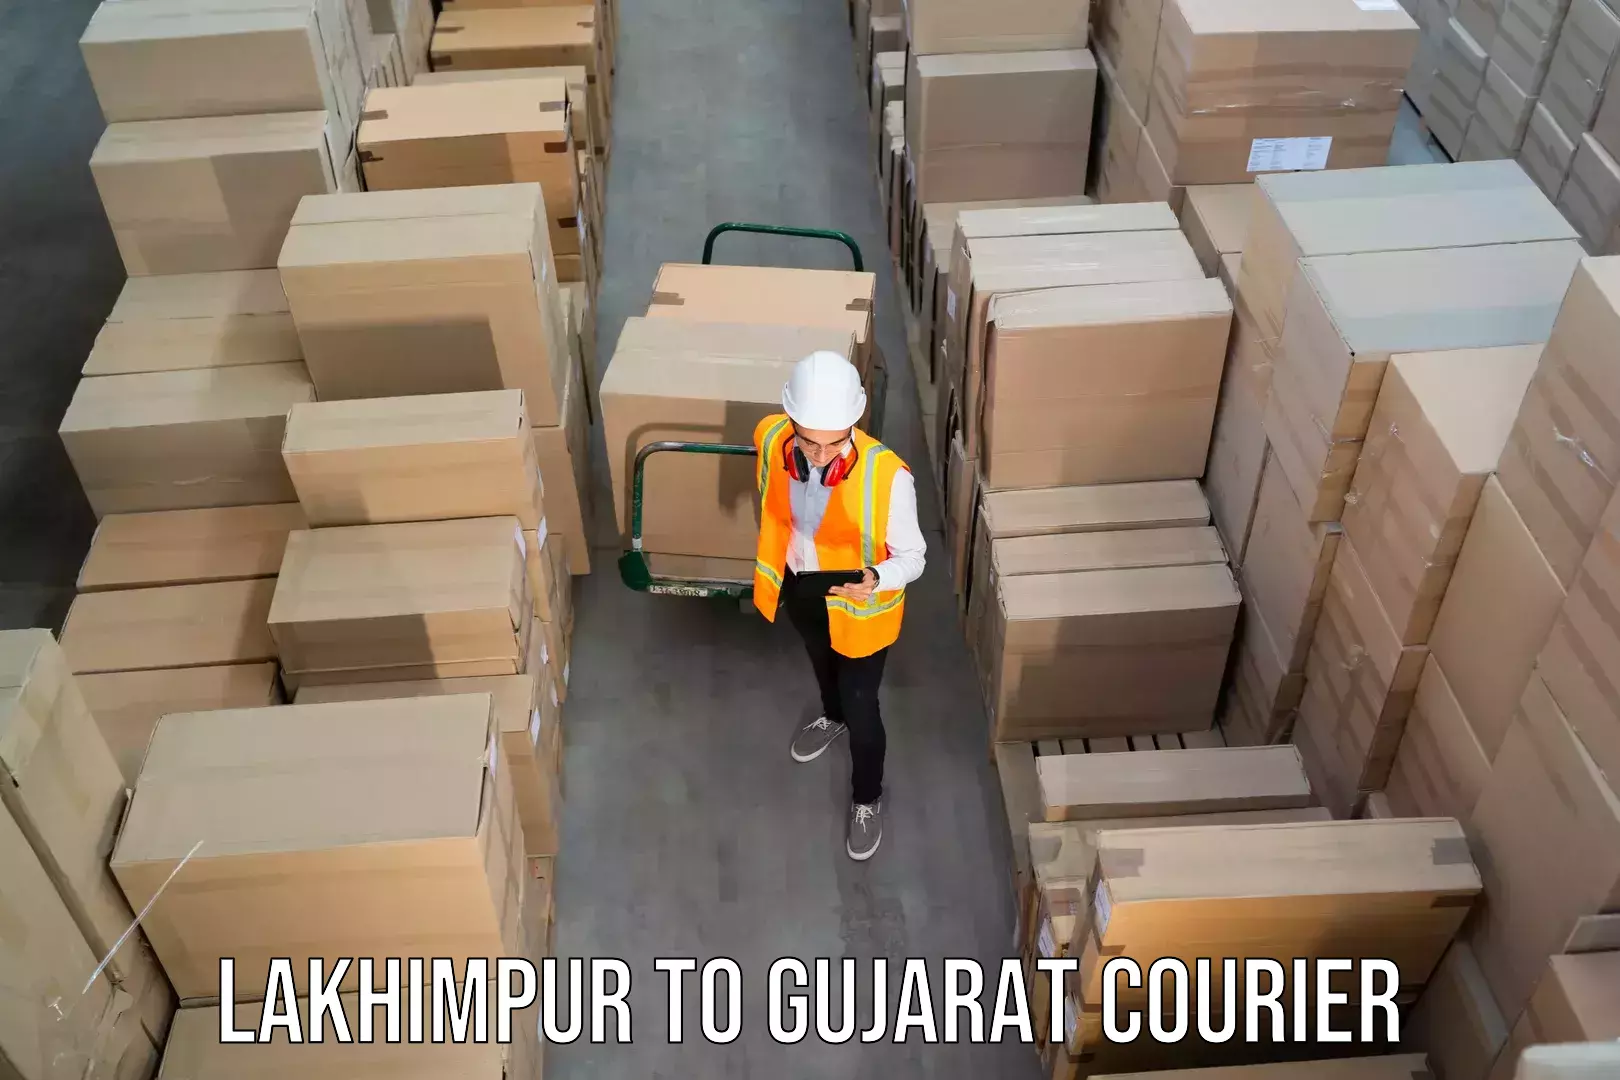 Courier service partnerships Lakhimpur to Kachchh